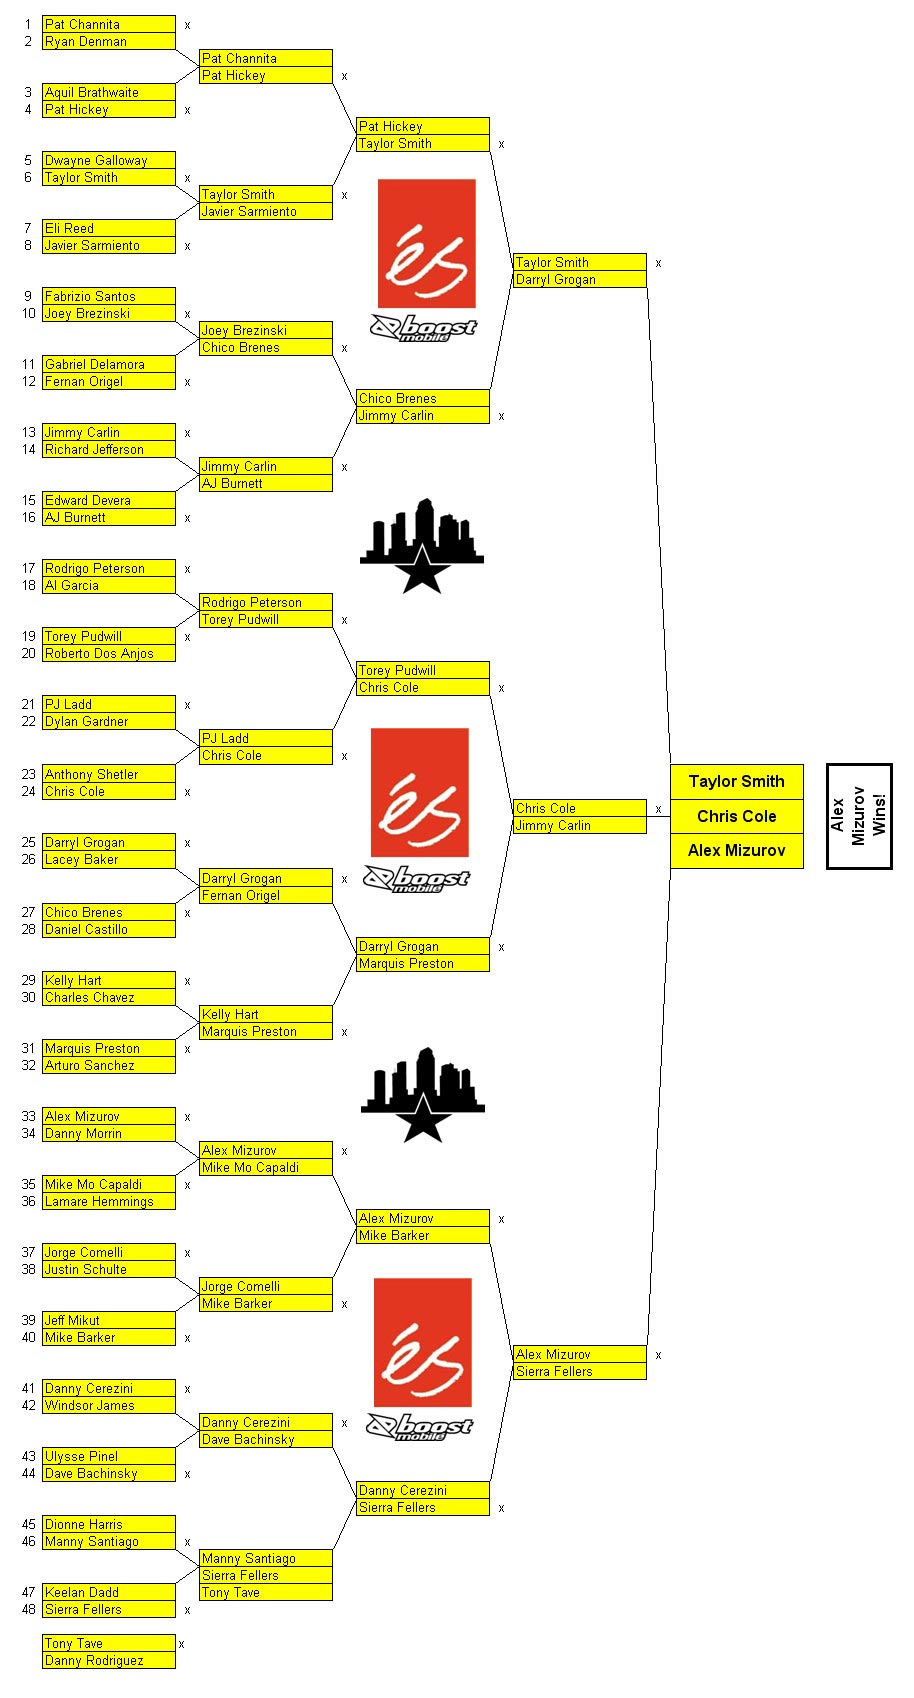 eS Game of SKATE 2006 Pro Results